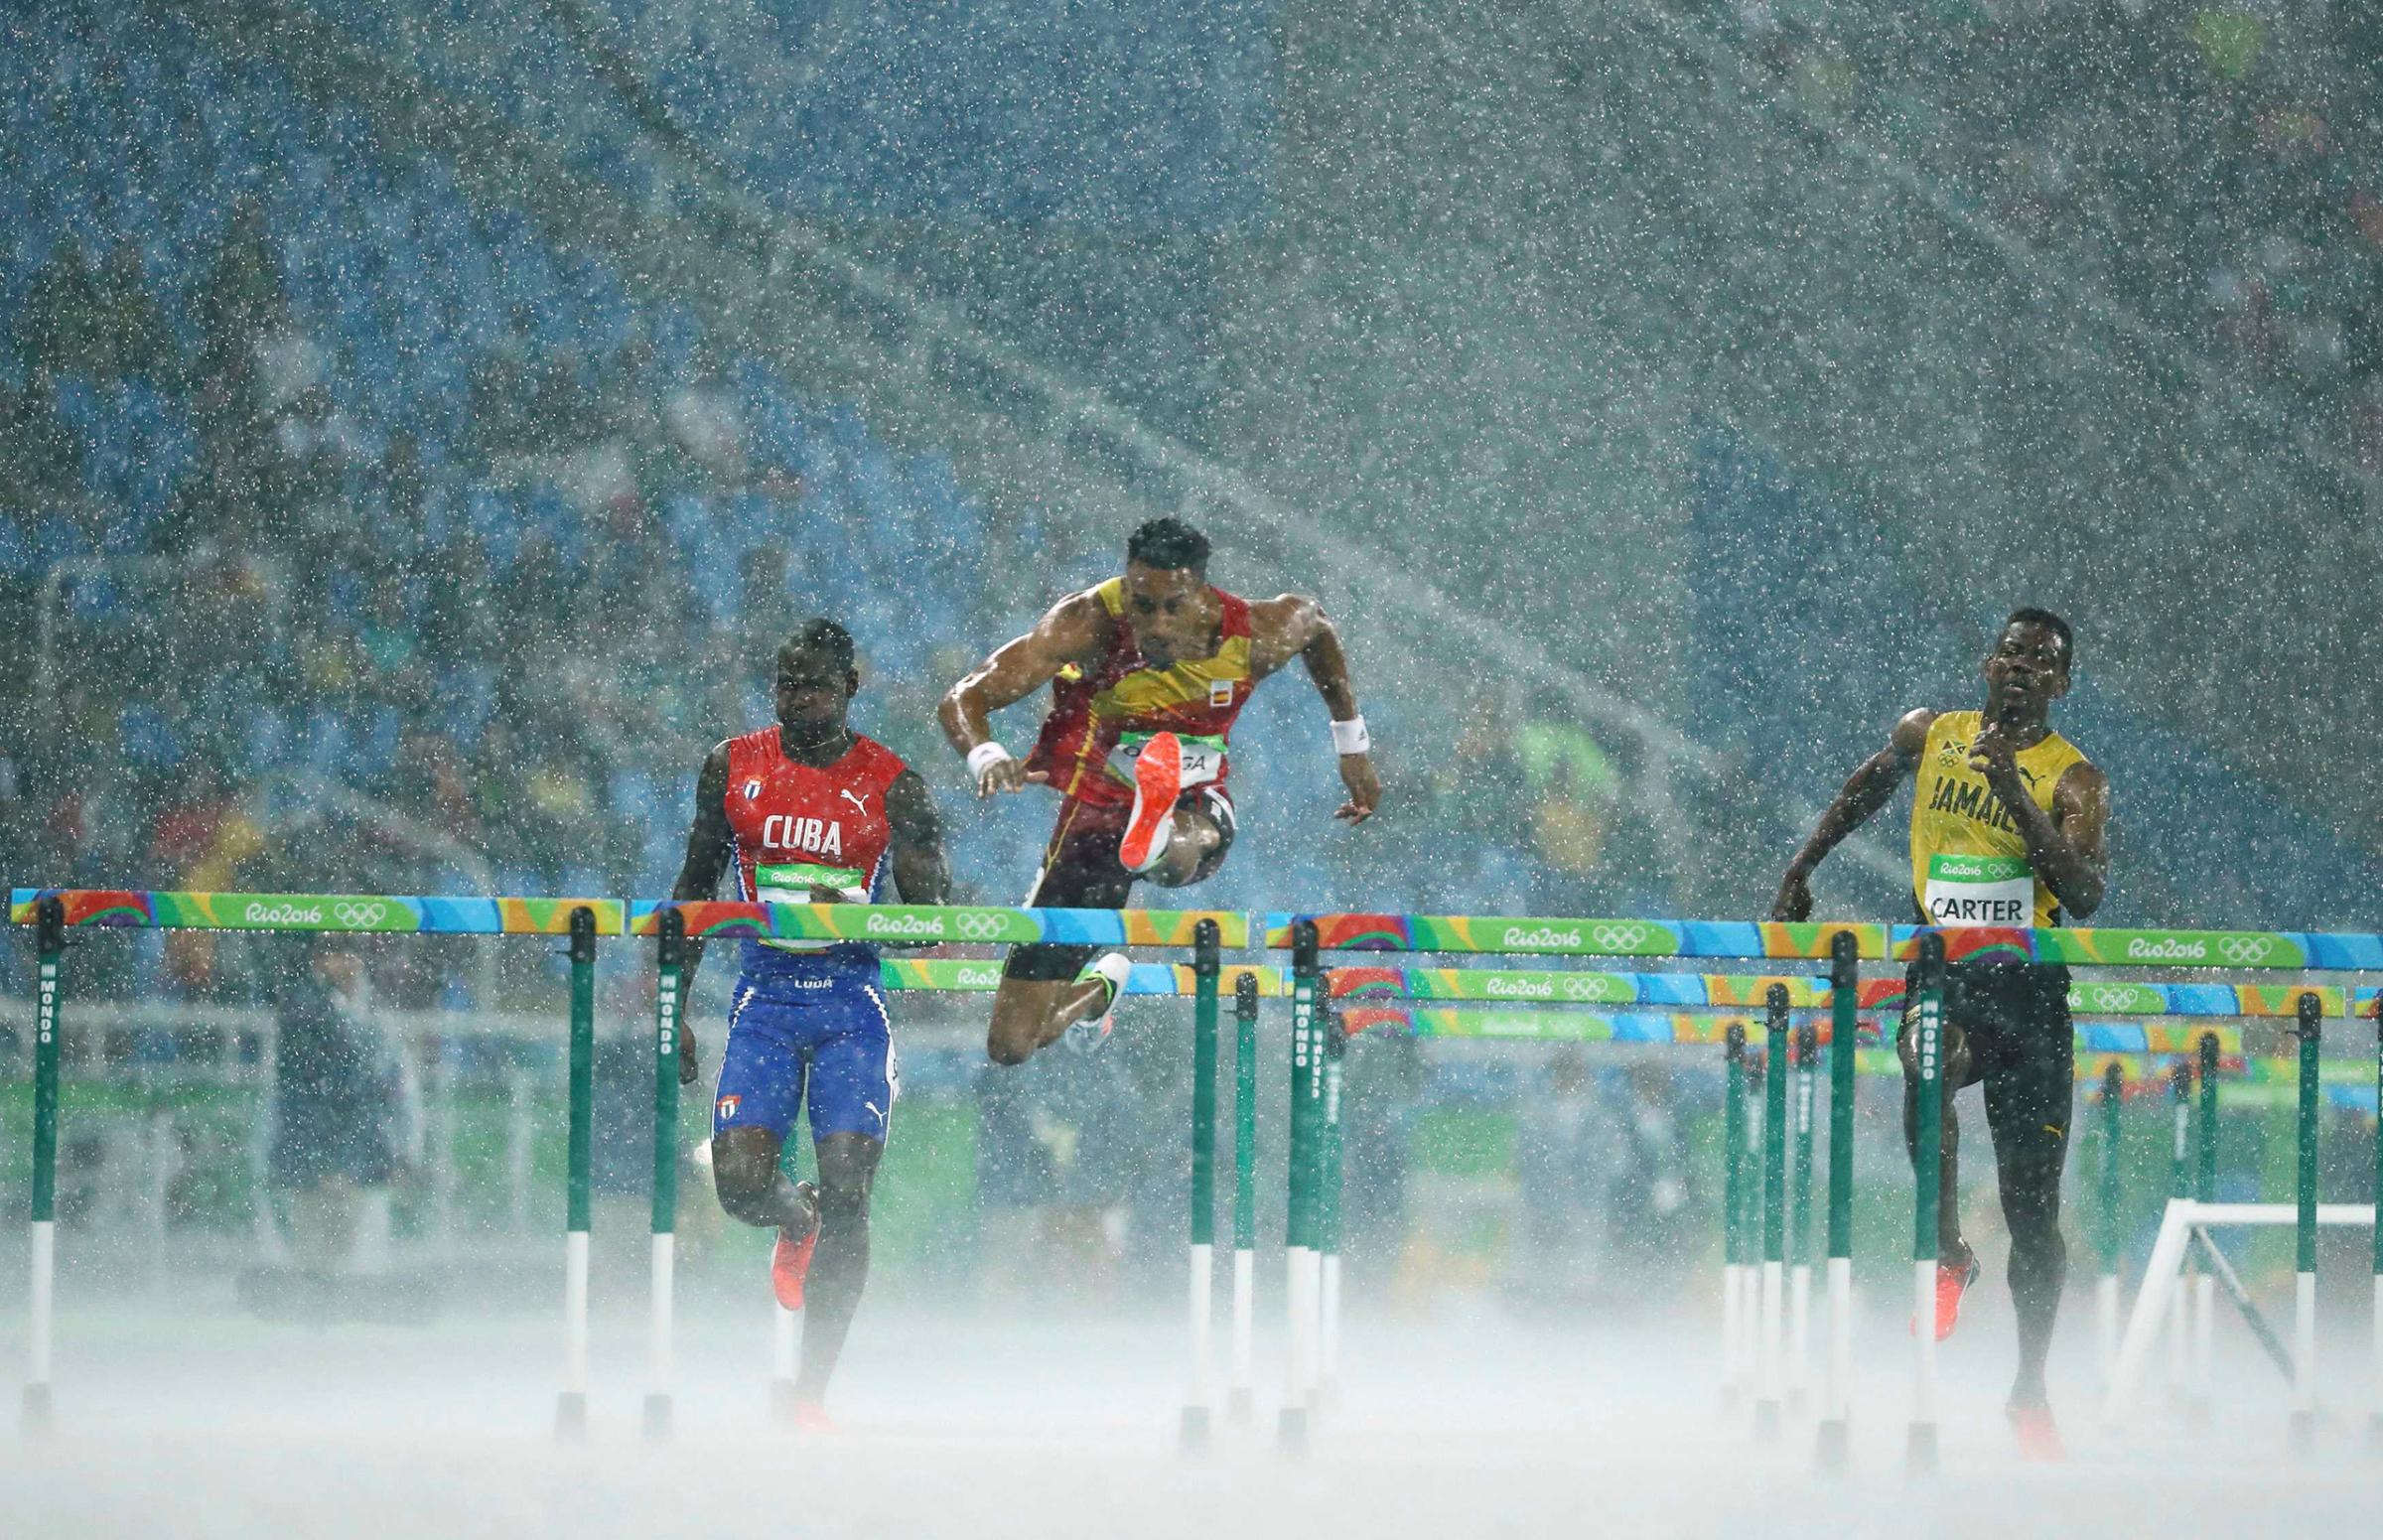 Jhoanis Portilla of Cuba, Orlando Ortega of Spain and Deuce Carter of Jamaica compete in the rain during the 2016 Rio Olympics Men's 110m Hurdles in Rio de Janeiro, Brazil, Aug. 15, 2016.